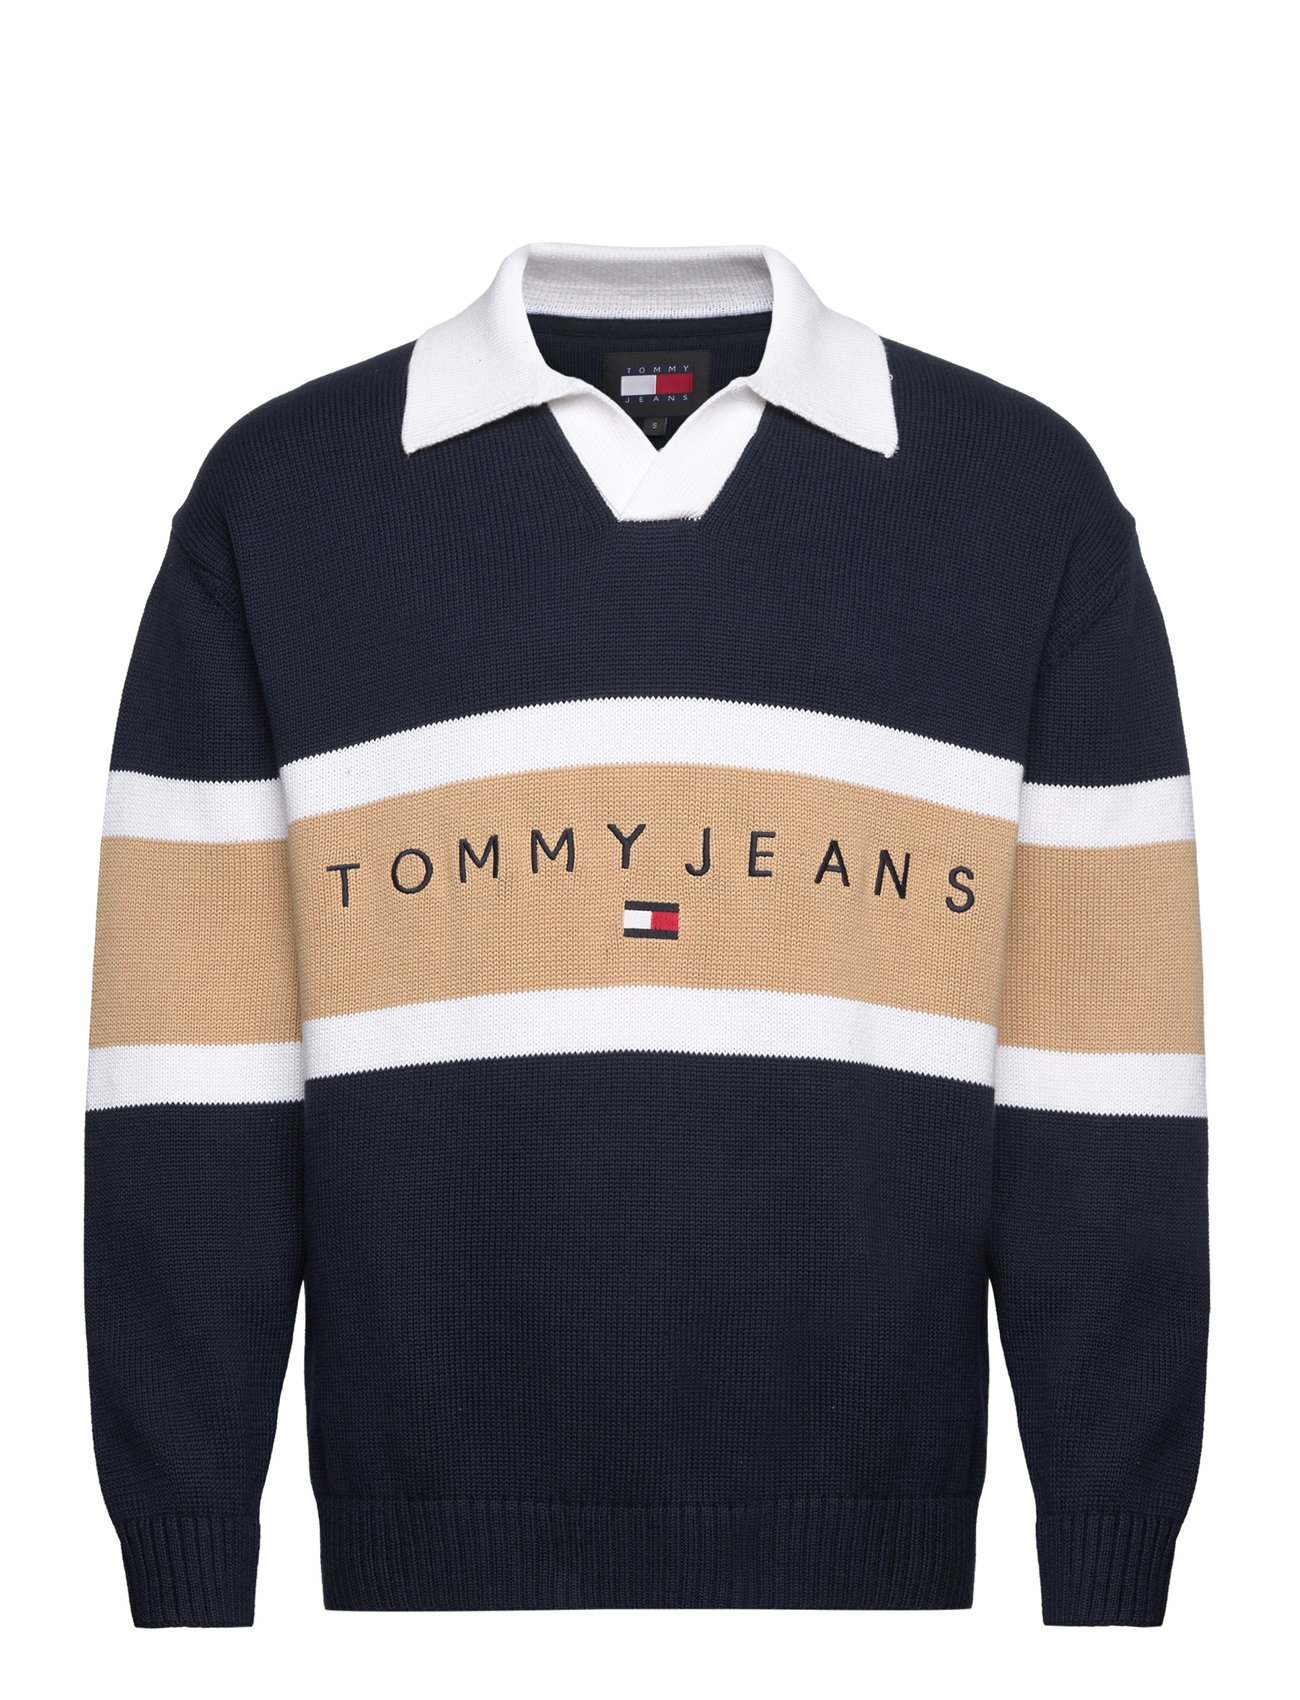 Tjm Rlx Trophy Neck Rugby Tops Knitwear V-necks Navy Tommy Jeans